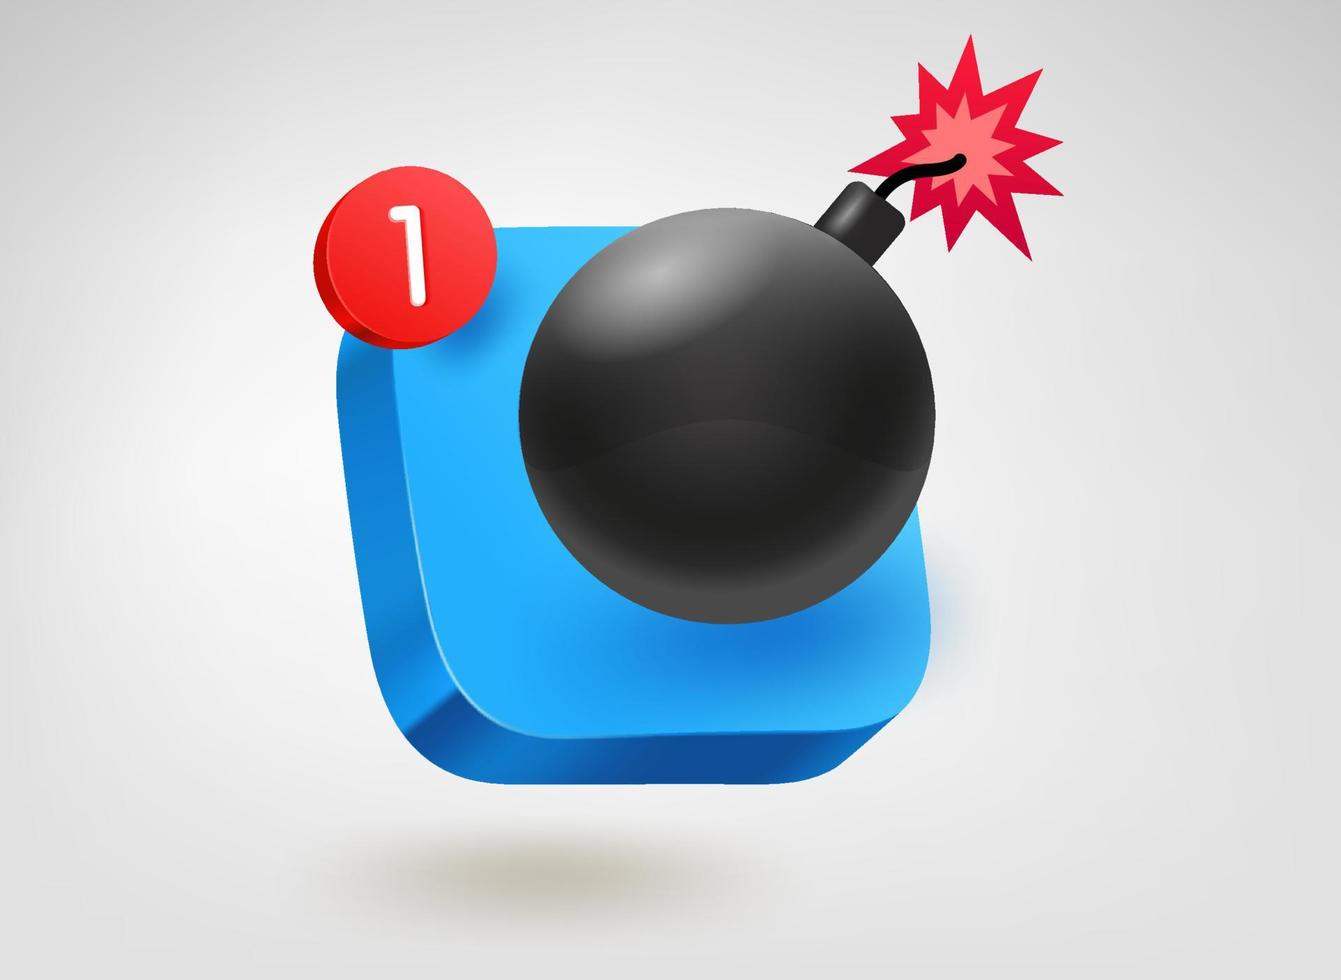 bomba. 3d vektor mobil applikationsikon med meddelande